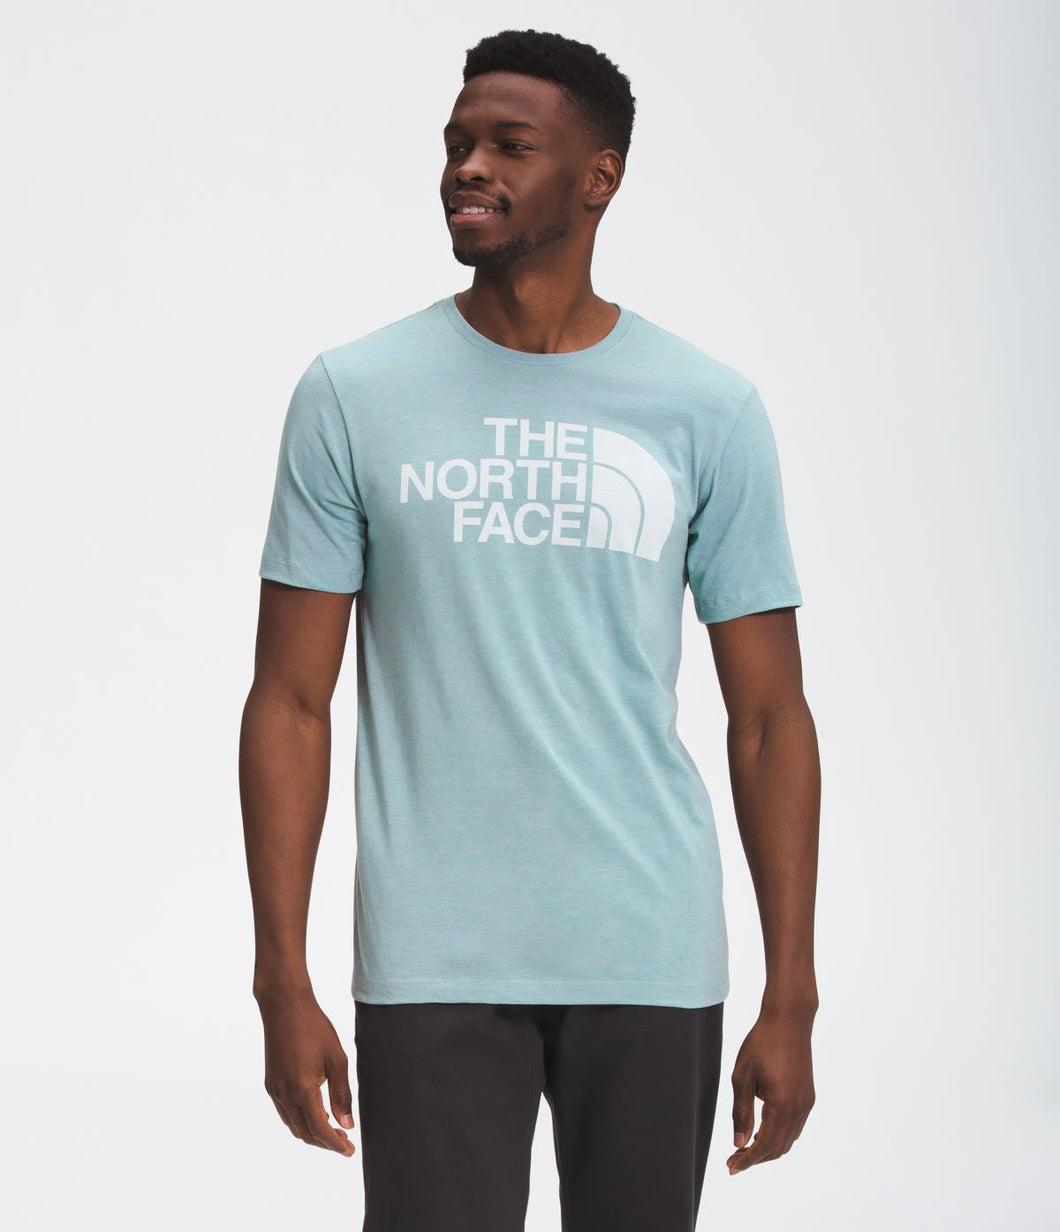 'The North Face' Men's Half Dome Triblend T-Shirt - Tourmaline Blue Heather